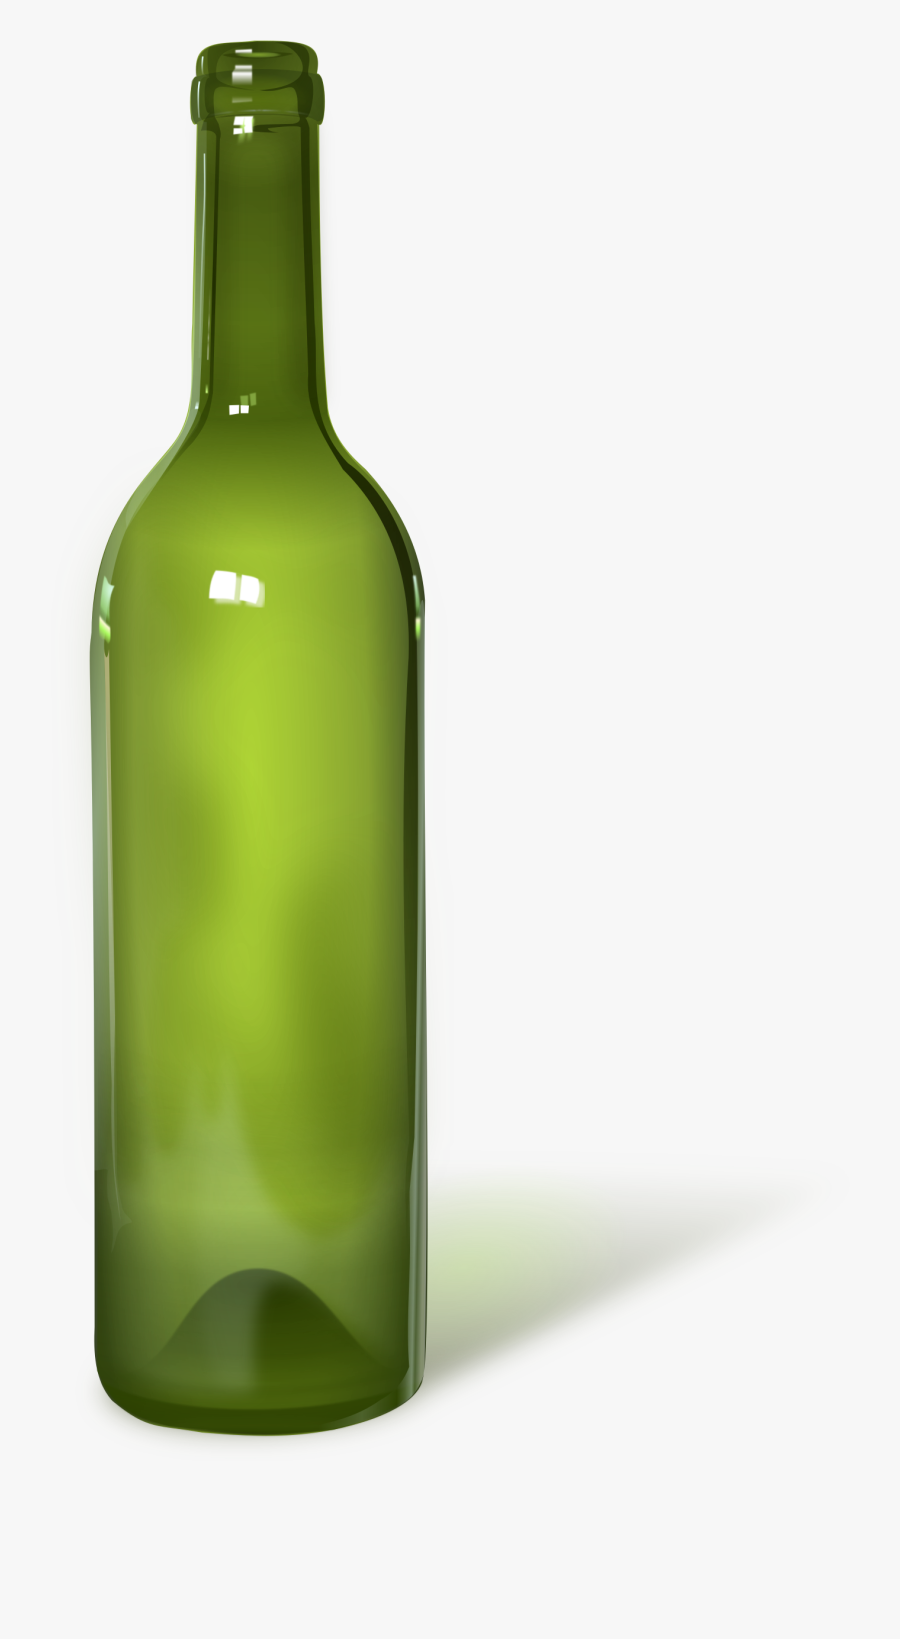 Detailed - Green Wine Bottle Png, Transparent Clipart